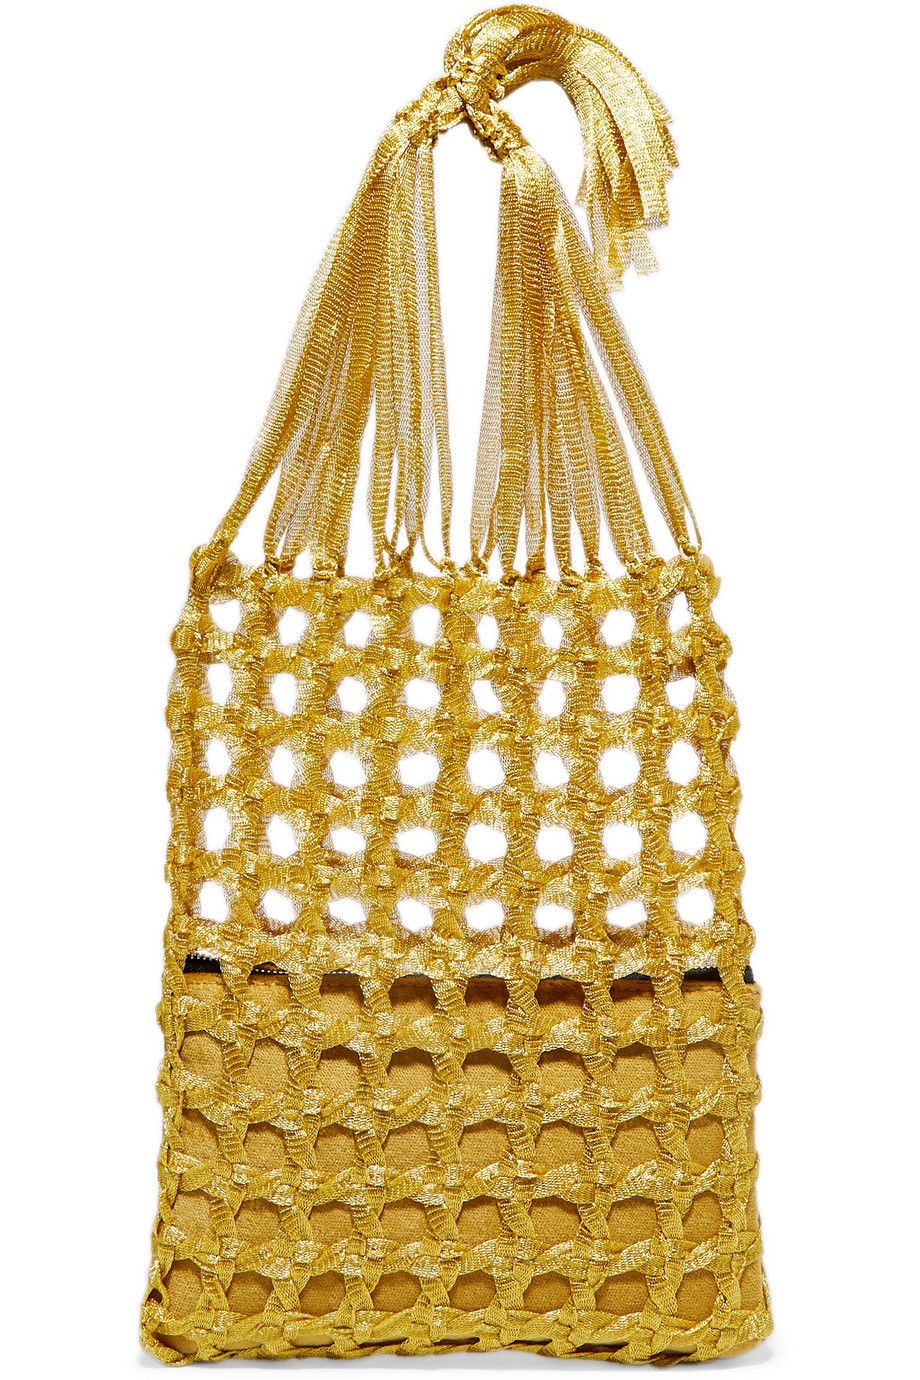 Mehry Mu 黃色針織包，約NT$13,780